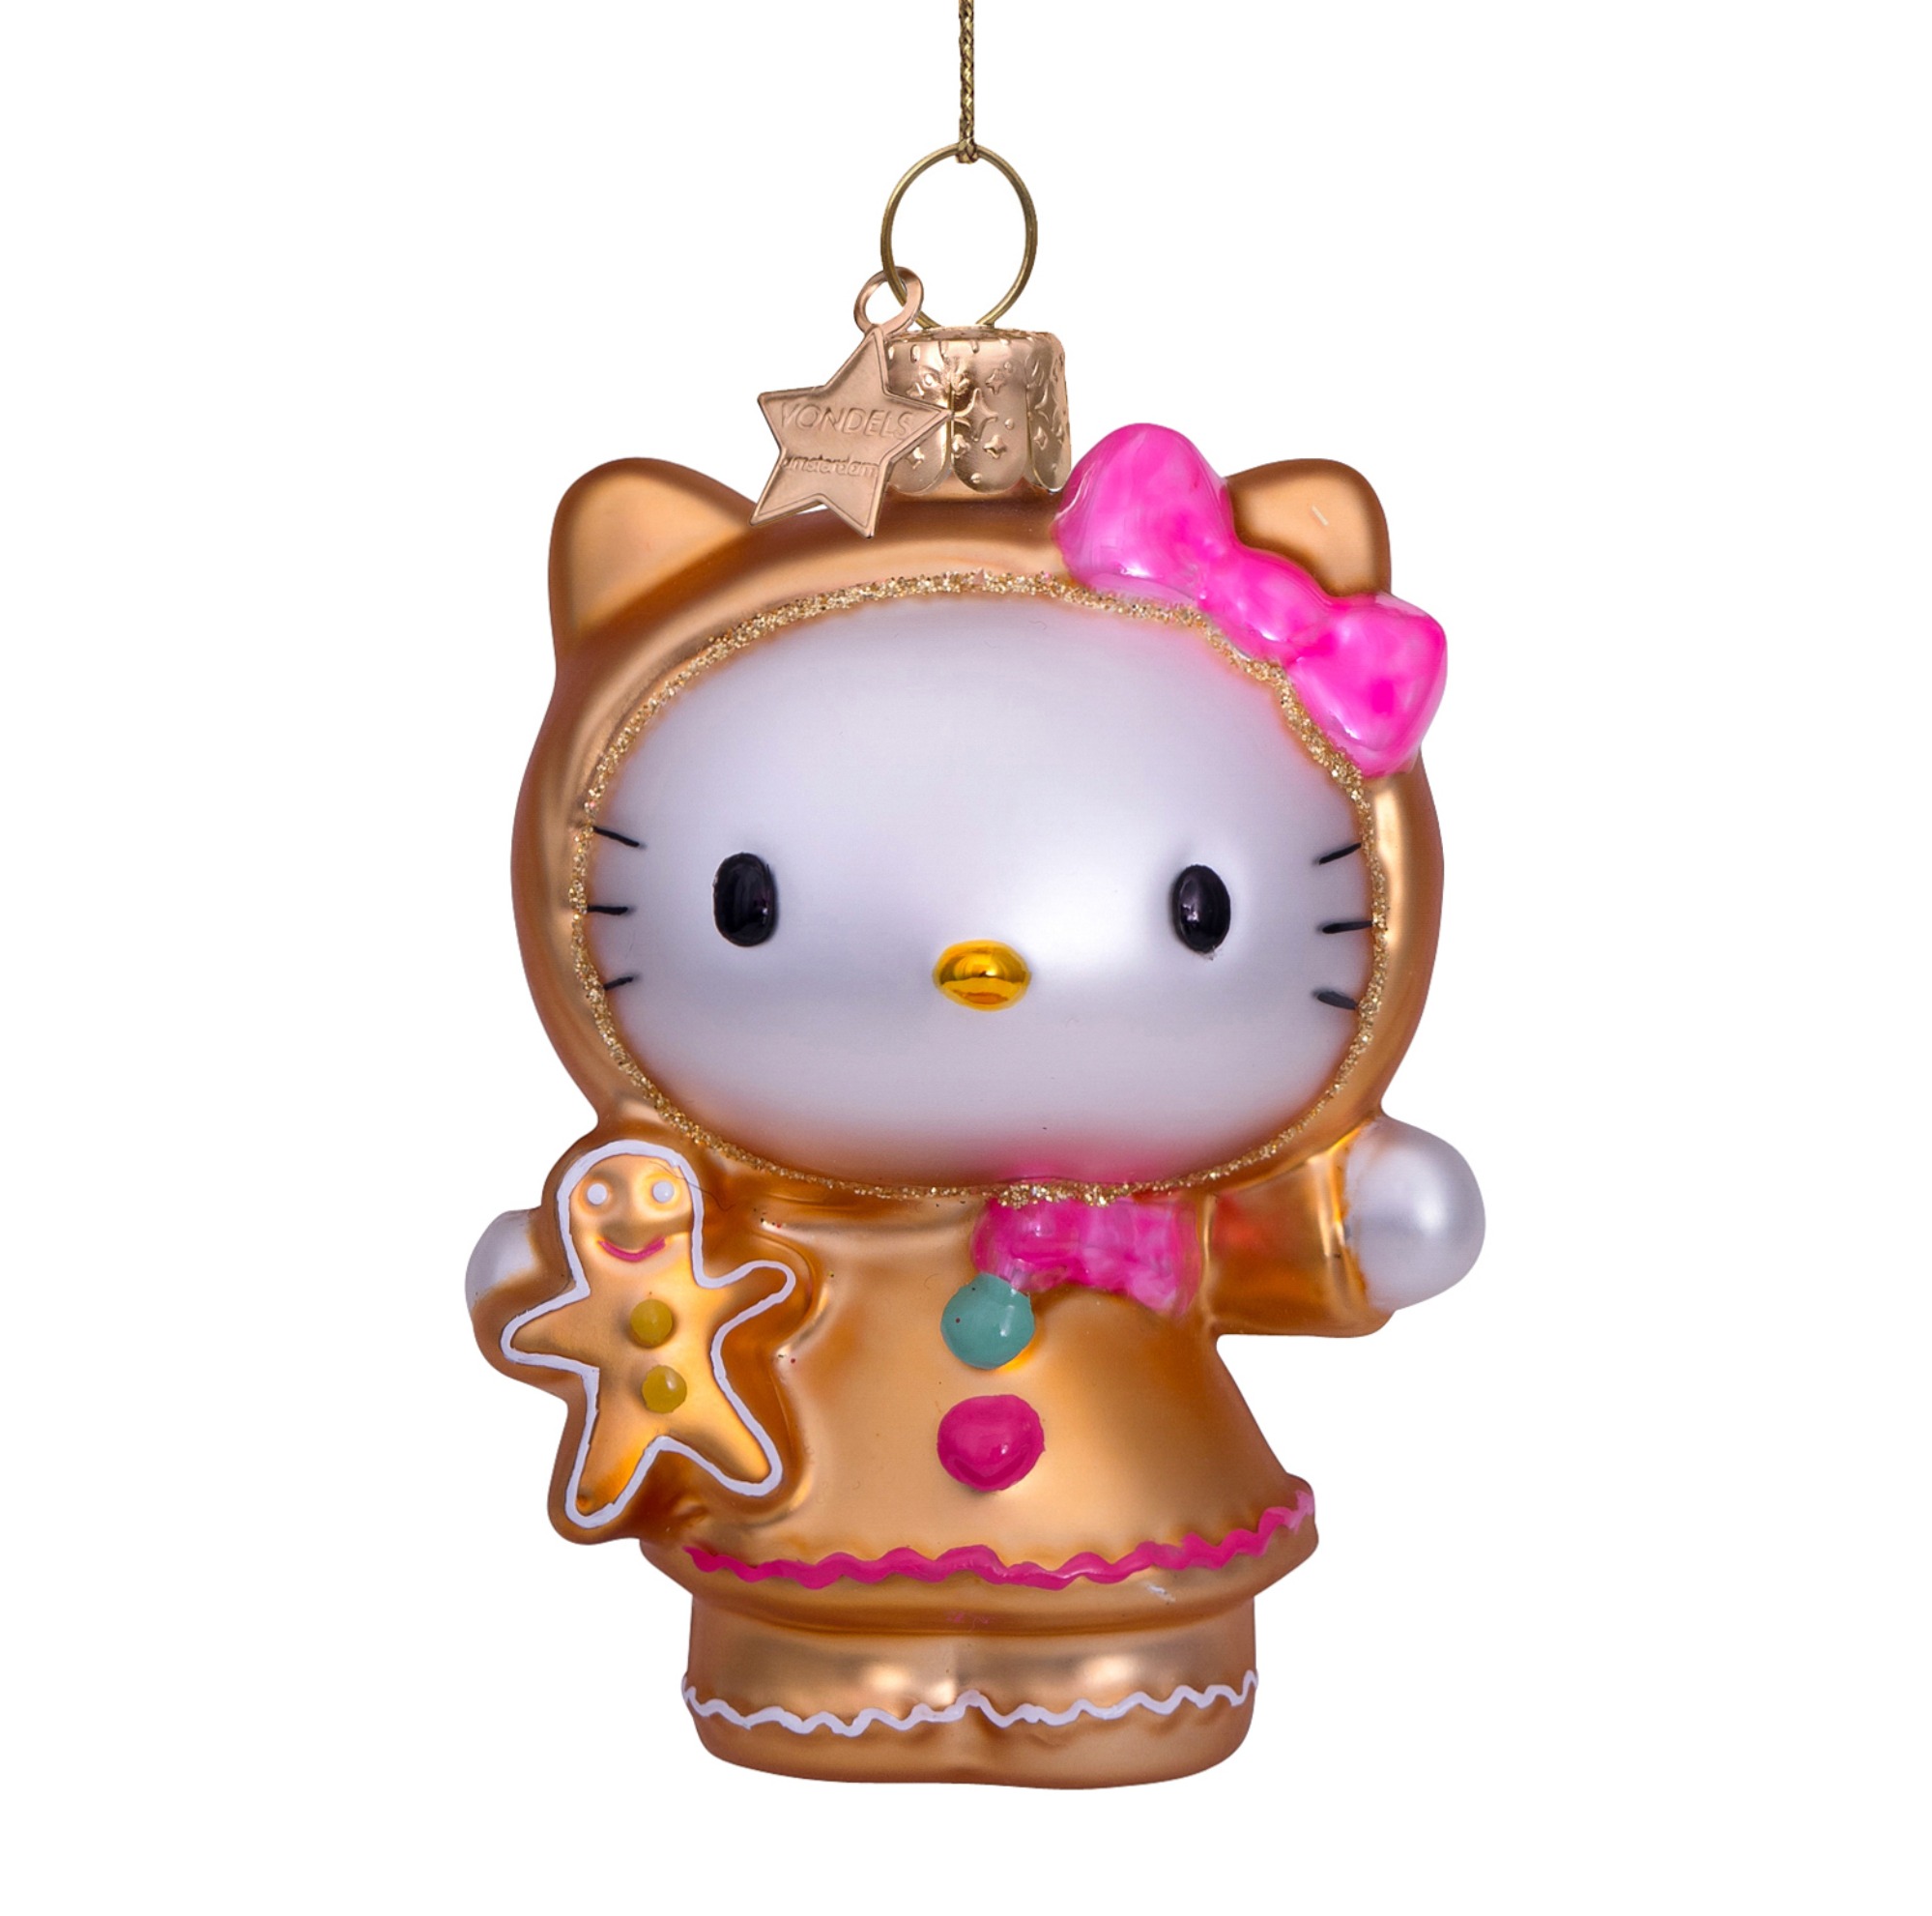 VONDELS Ornament Glass Hello Kitty Gingerbread